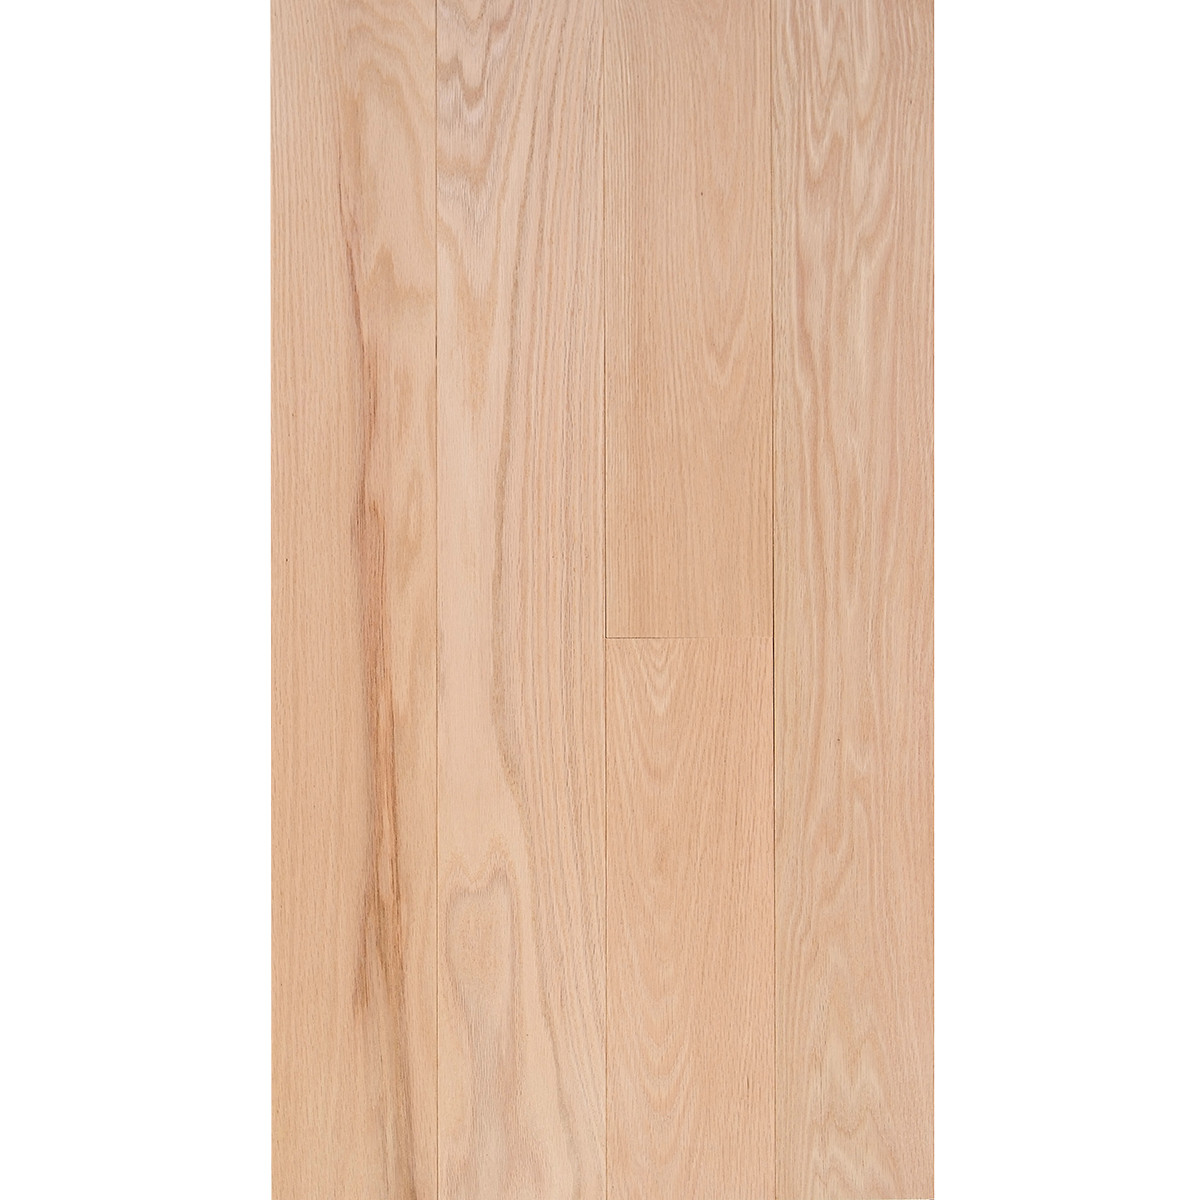 calculate hardwood flooring square footage of red oak 3 4 x 5 select grade flooring for fs 5 redoak select em flooring